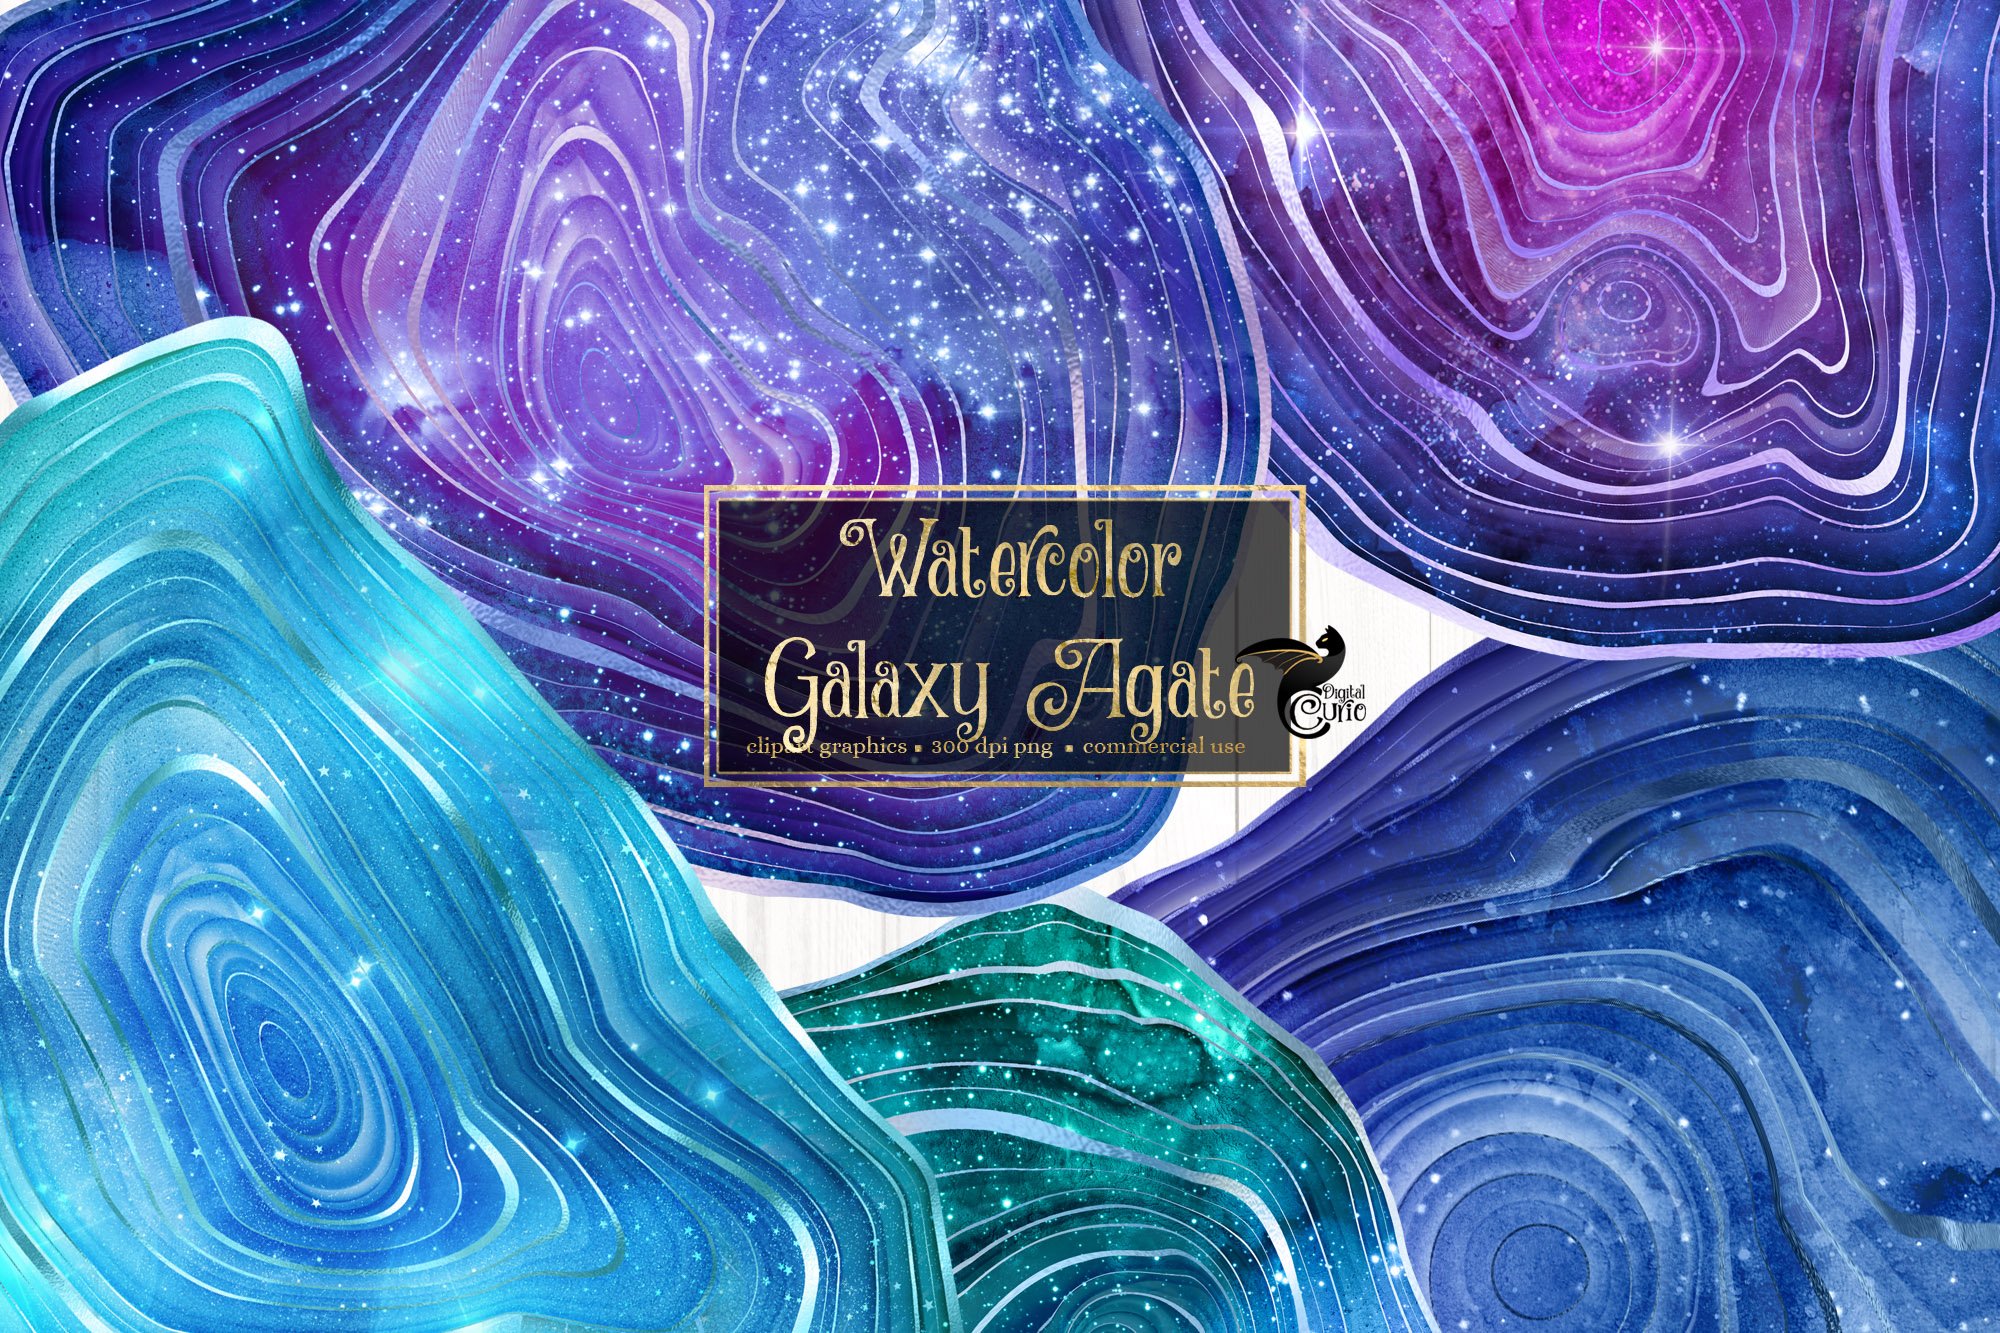 Watercolor Galaxy Agate Clip Art cover image.